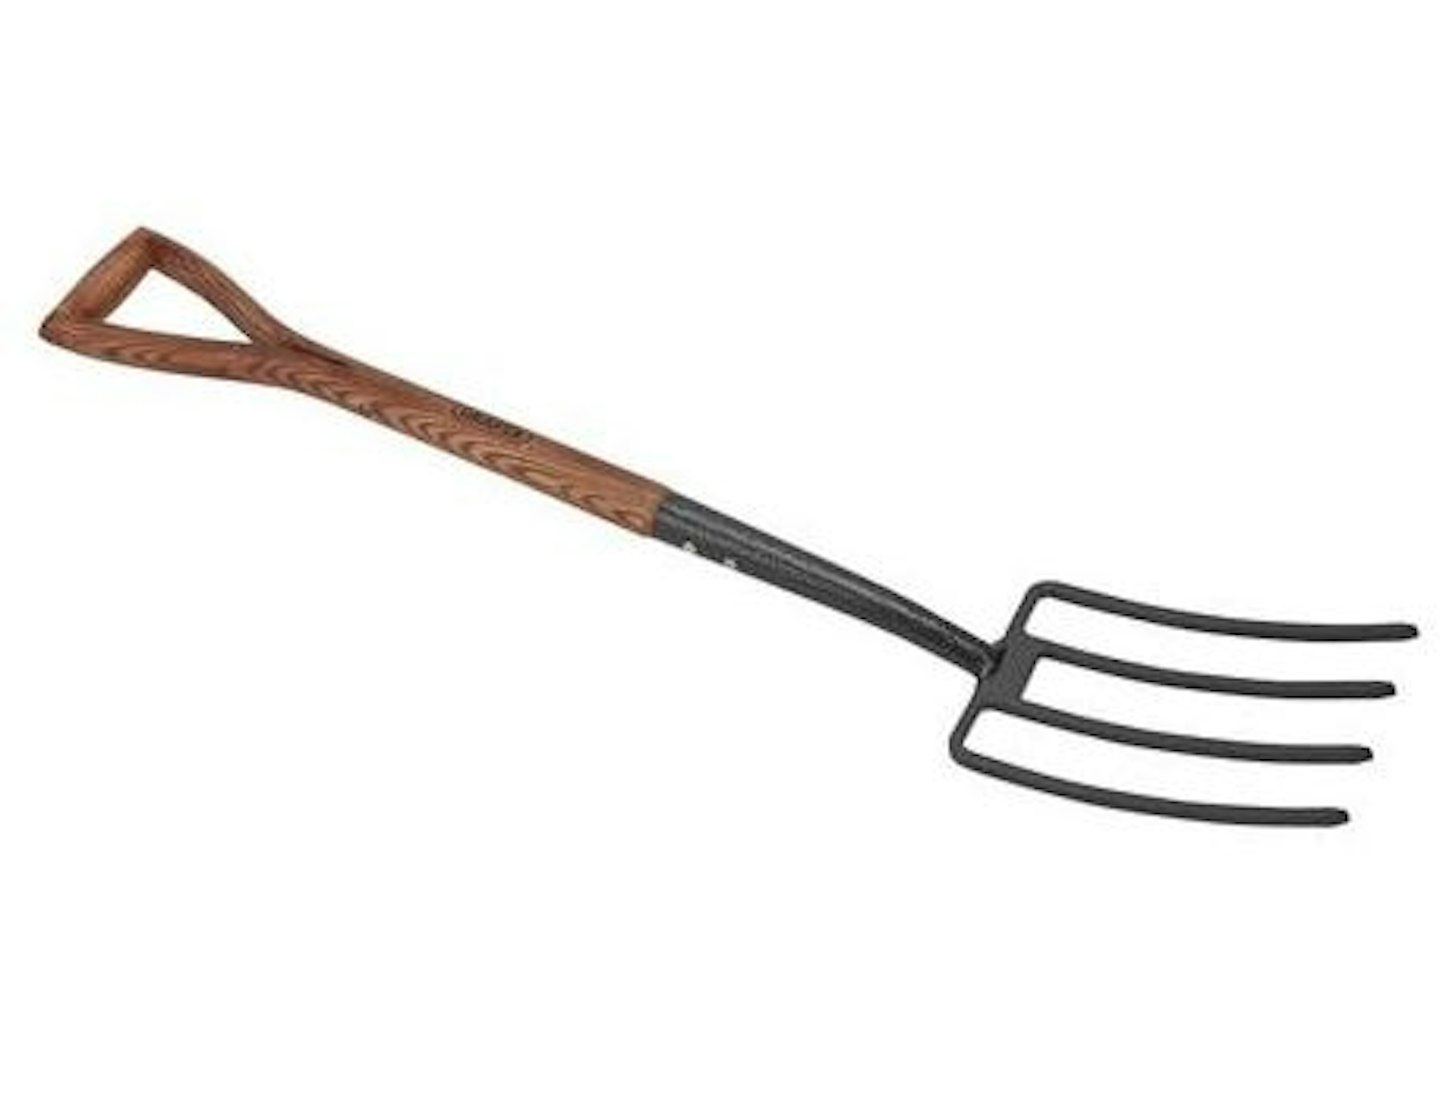 Draper Carbon Steel Garden Fork with Ash Handle